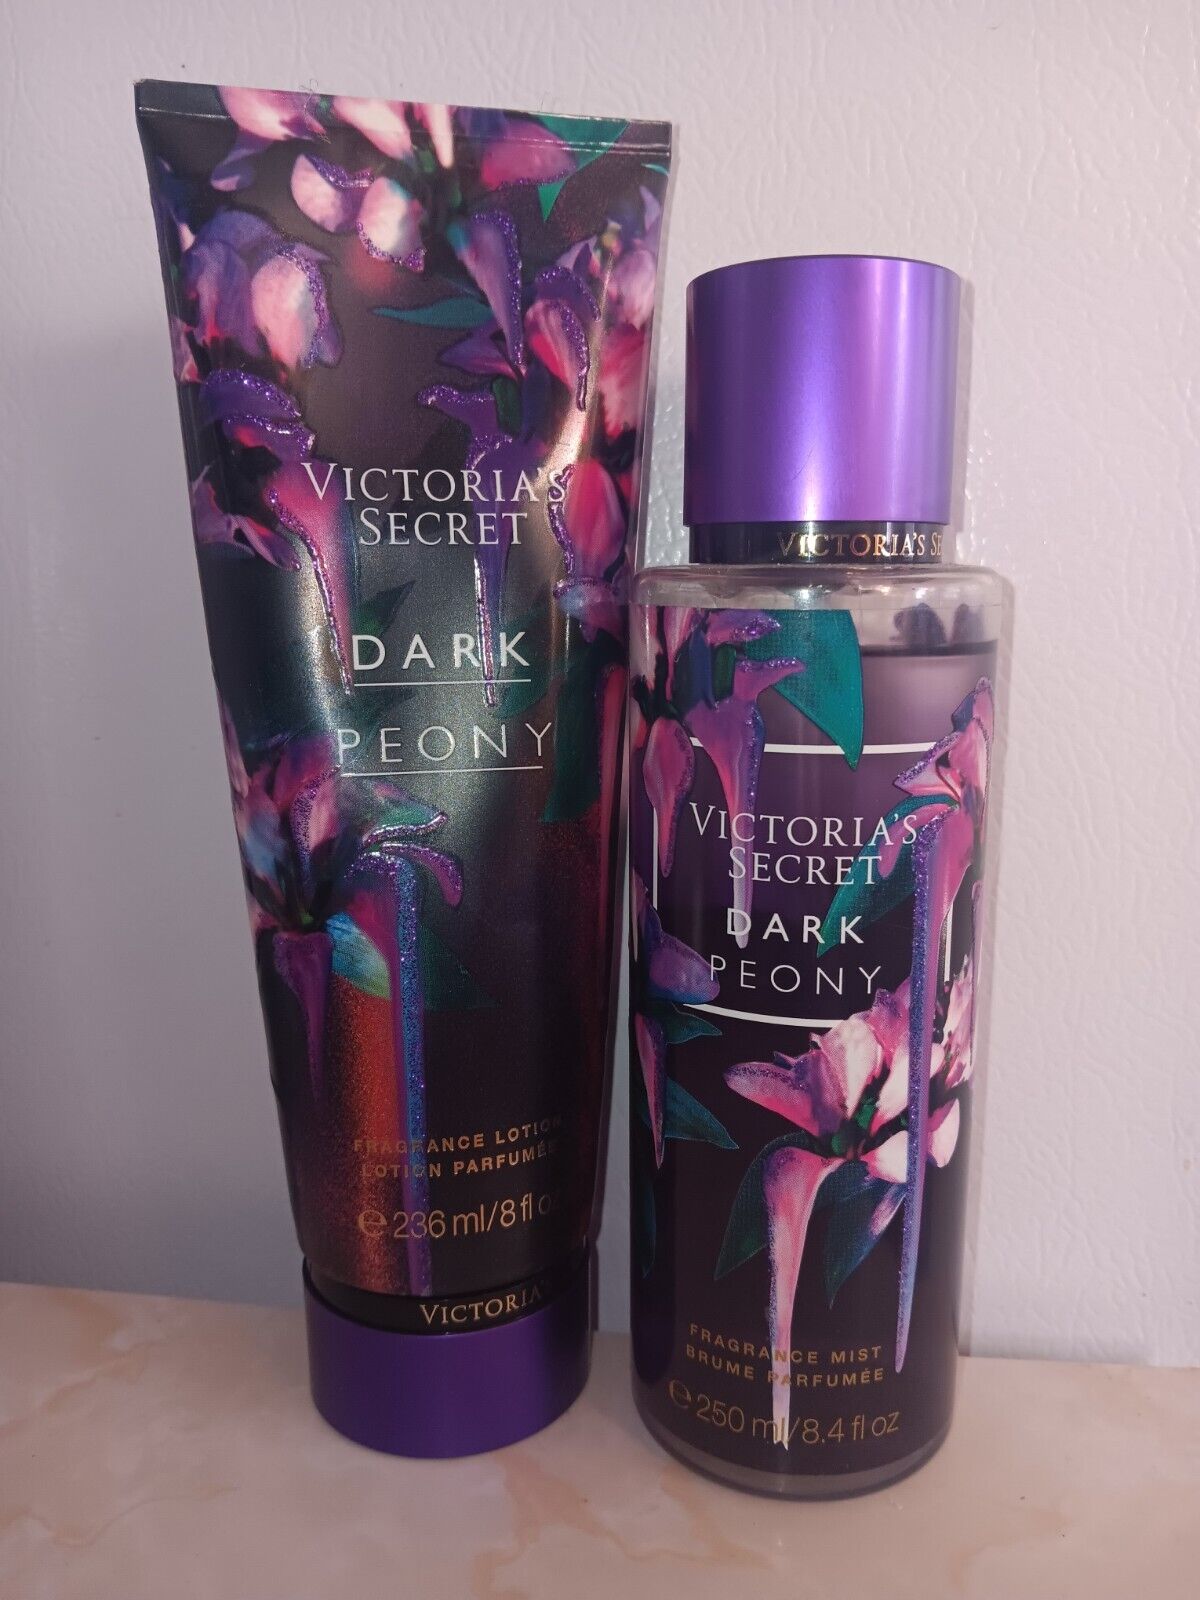 Victoria's Secret Dark Peony 8.4oz Fragrance Mist and 8oz Body Lotion